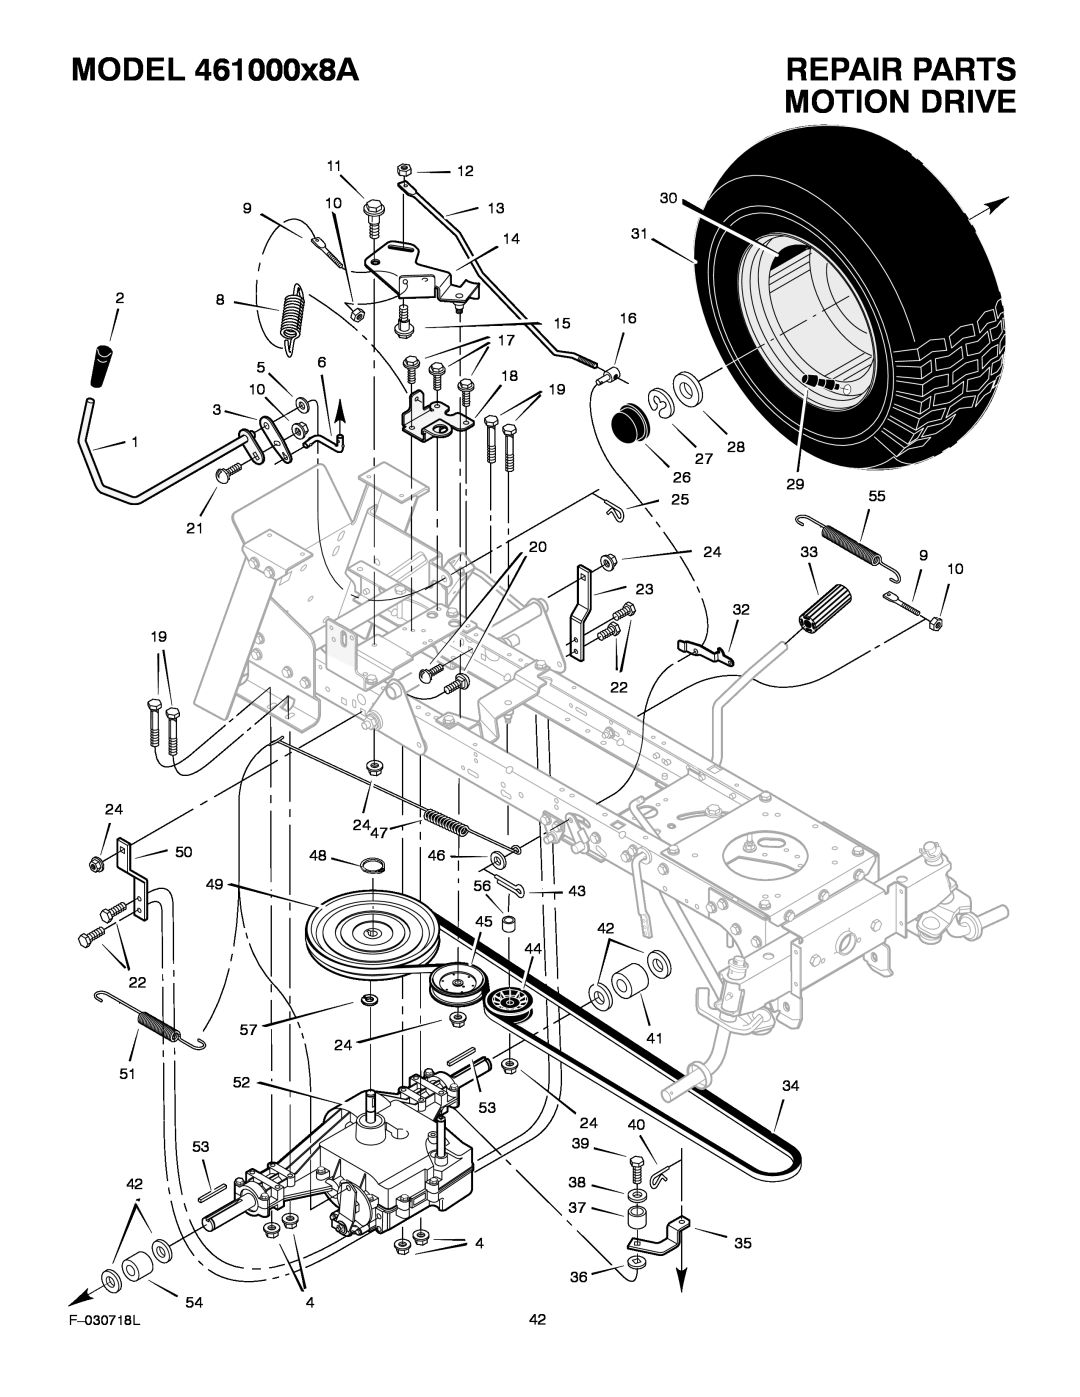 Murray manual Motion Drive, MODEL 461000x8A, Repair Parts, F-030718L 